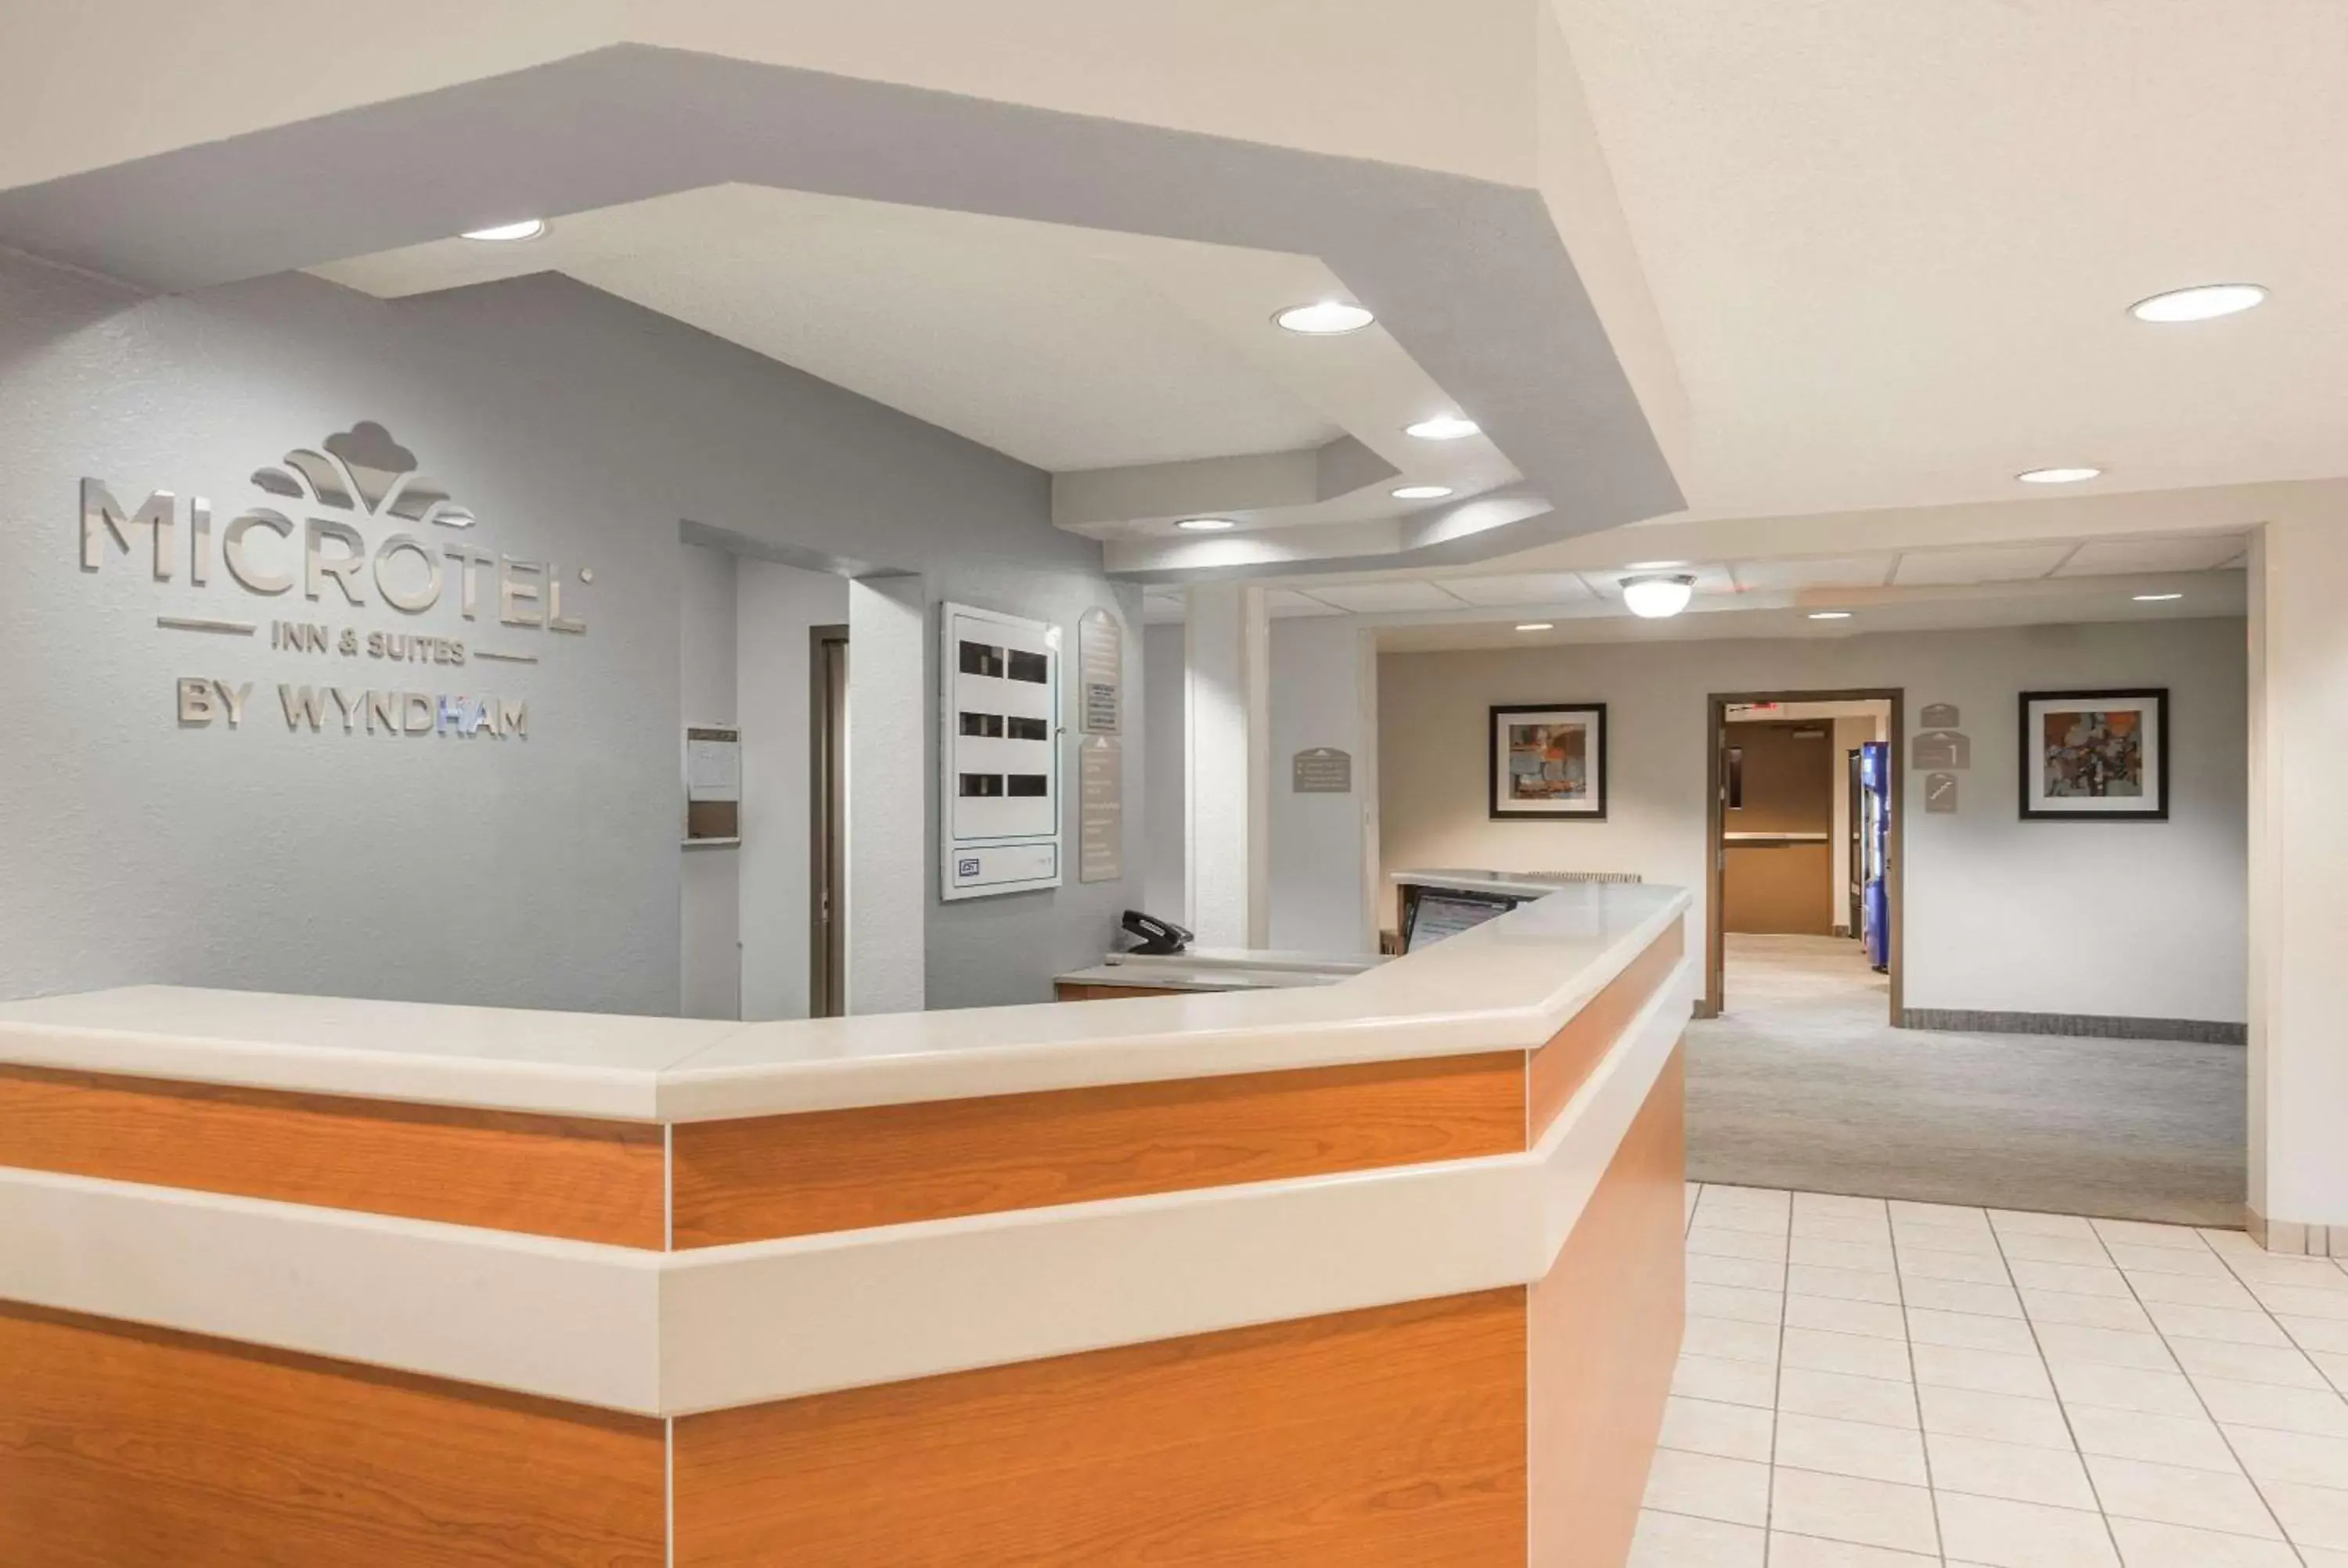 Lobby or reception, Lobby/Reception in Microtel Inn & Suites by Wyndham